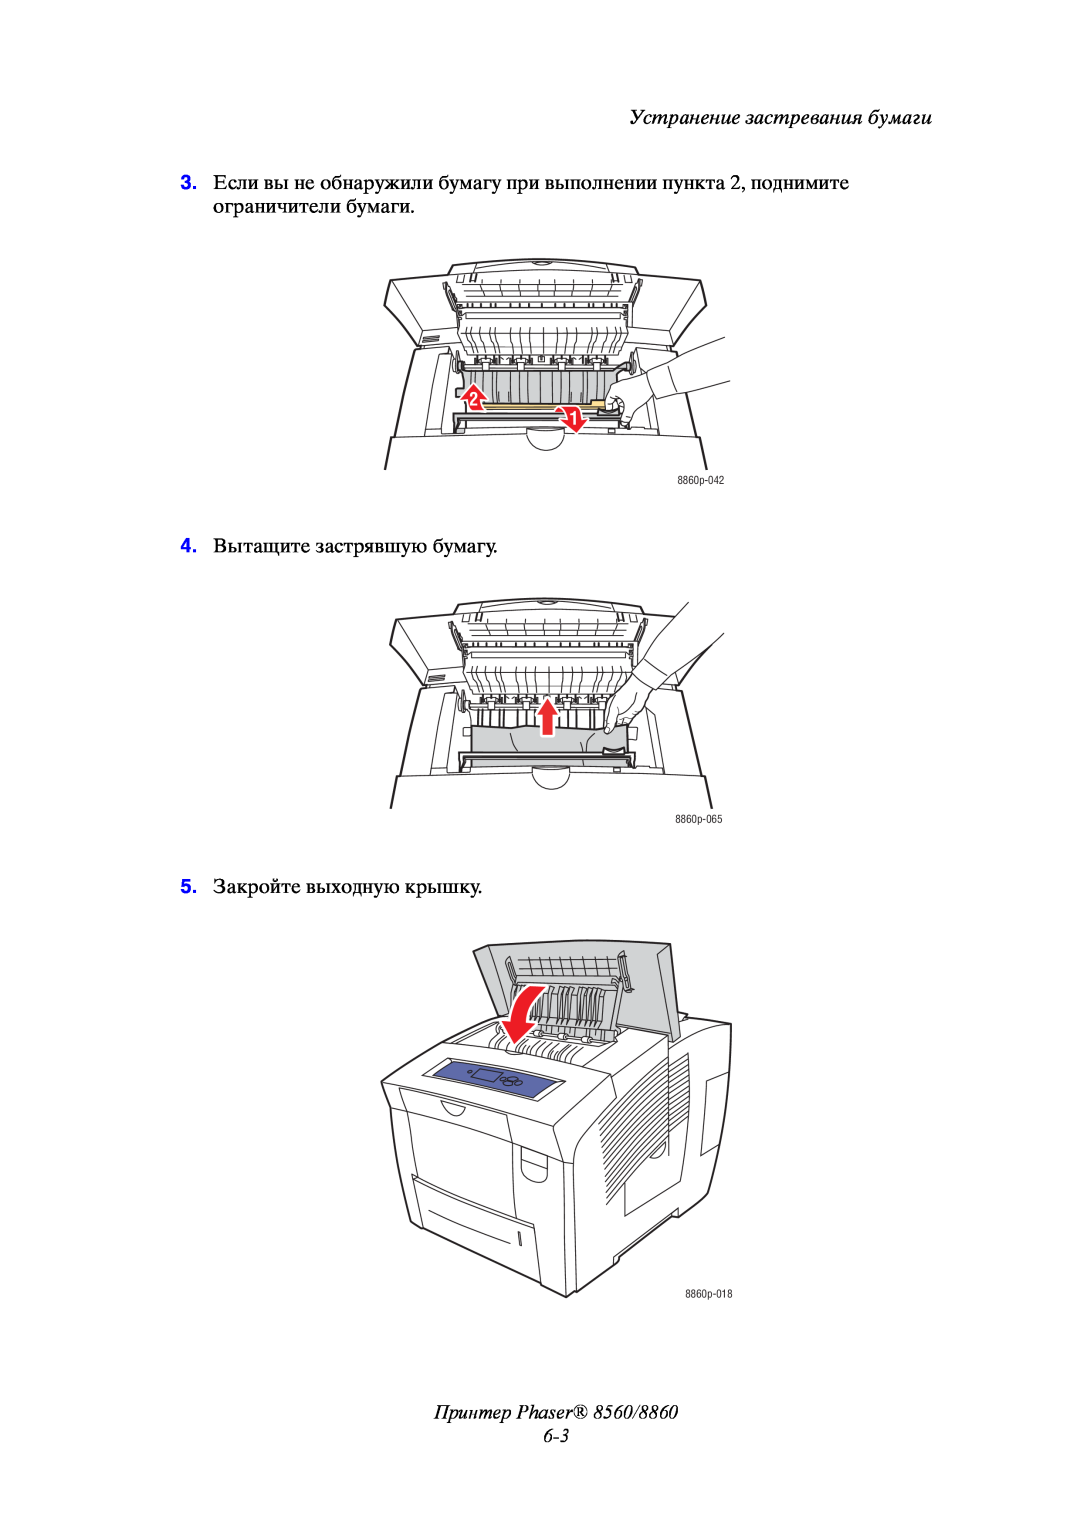 Xerox manual Принтер Phaser 8560/8860 6-3, Устранение застревания бумаги, 8860p-042, 8860p-065, 8860p-018 